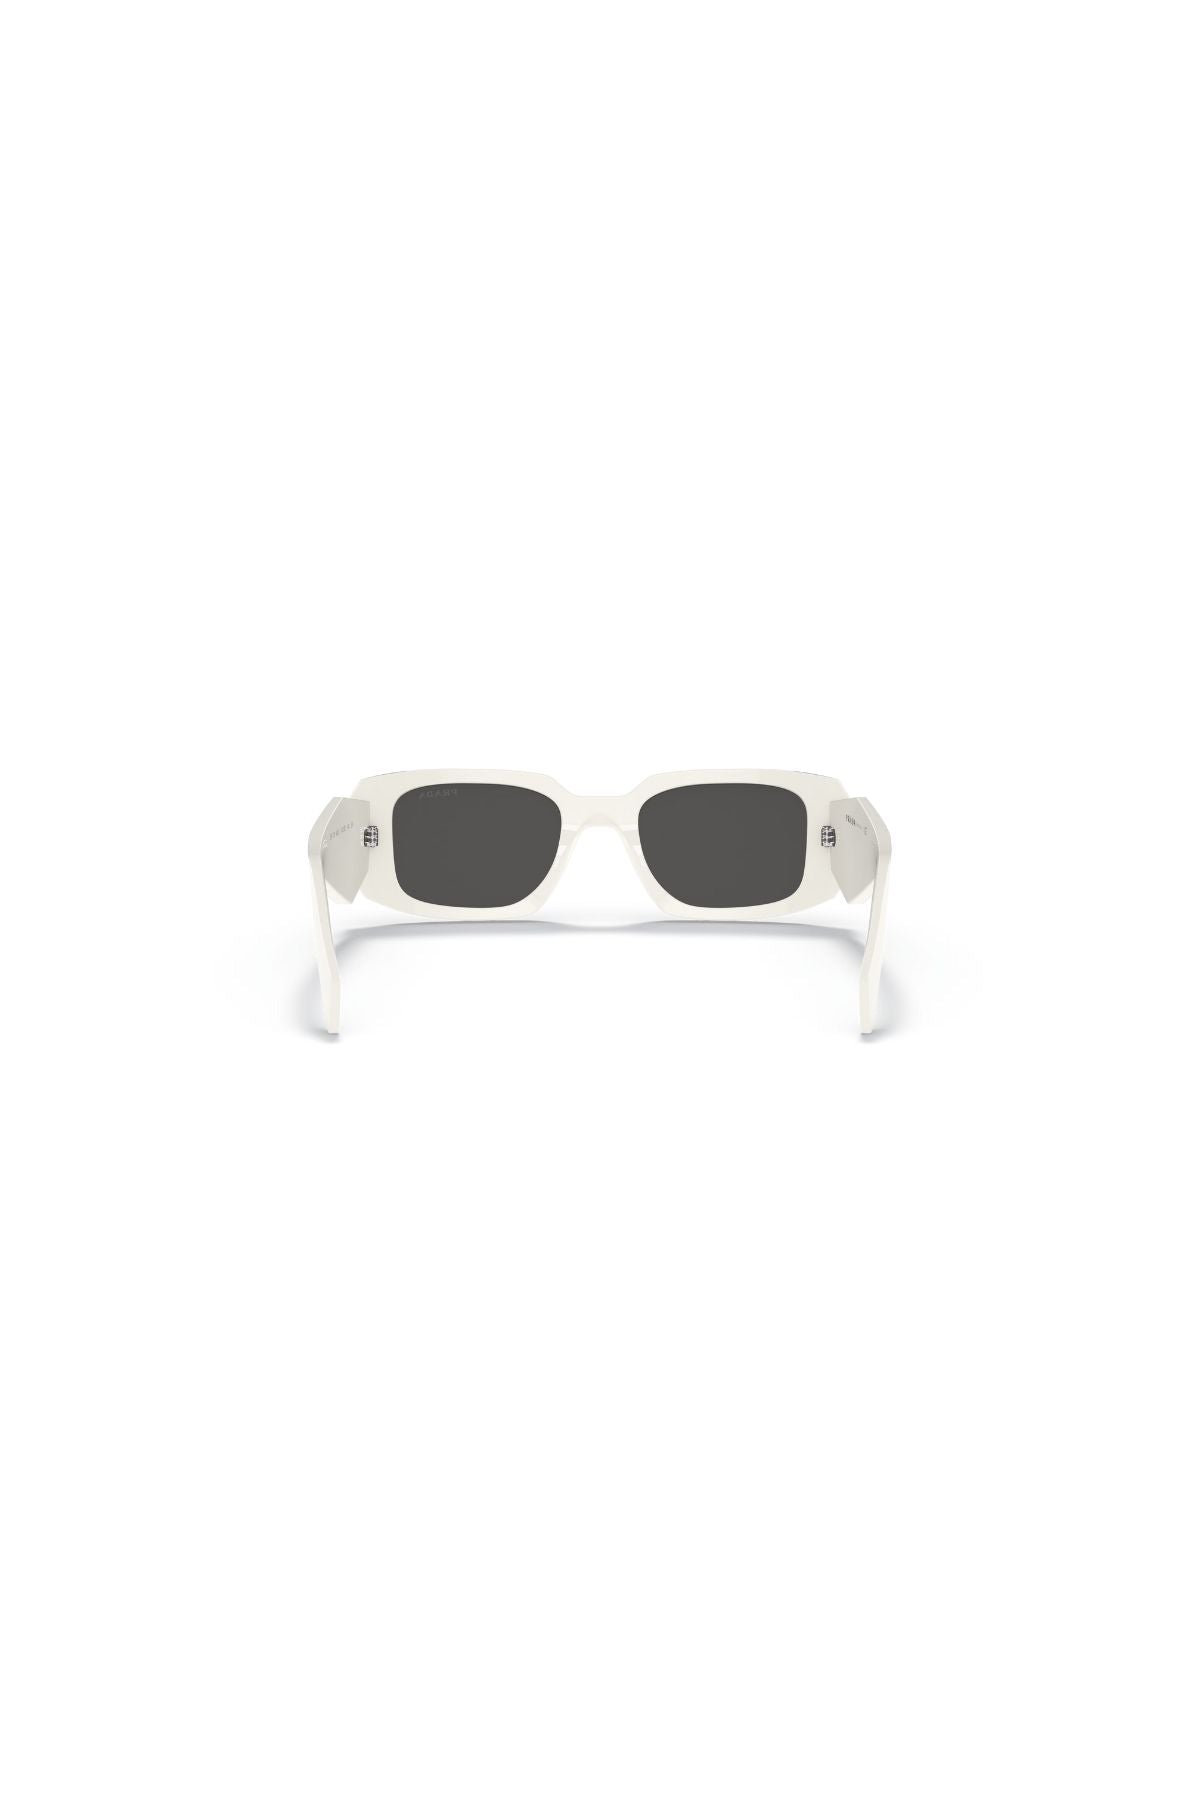 Prada Iconic Rectangle Sunglasses - Talc/ Dark Grey